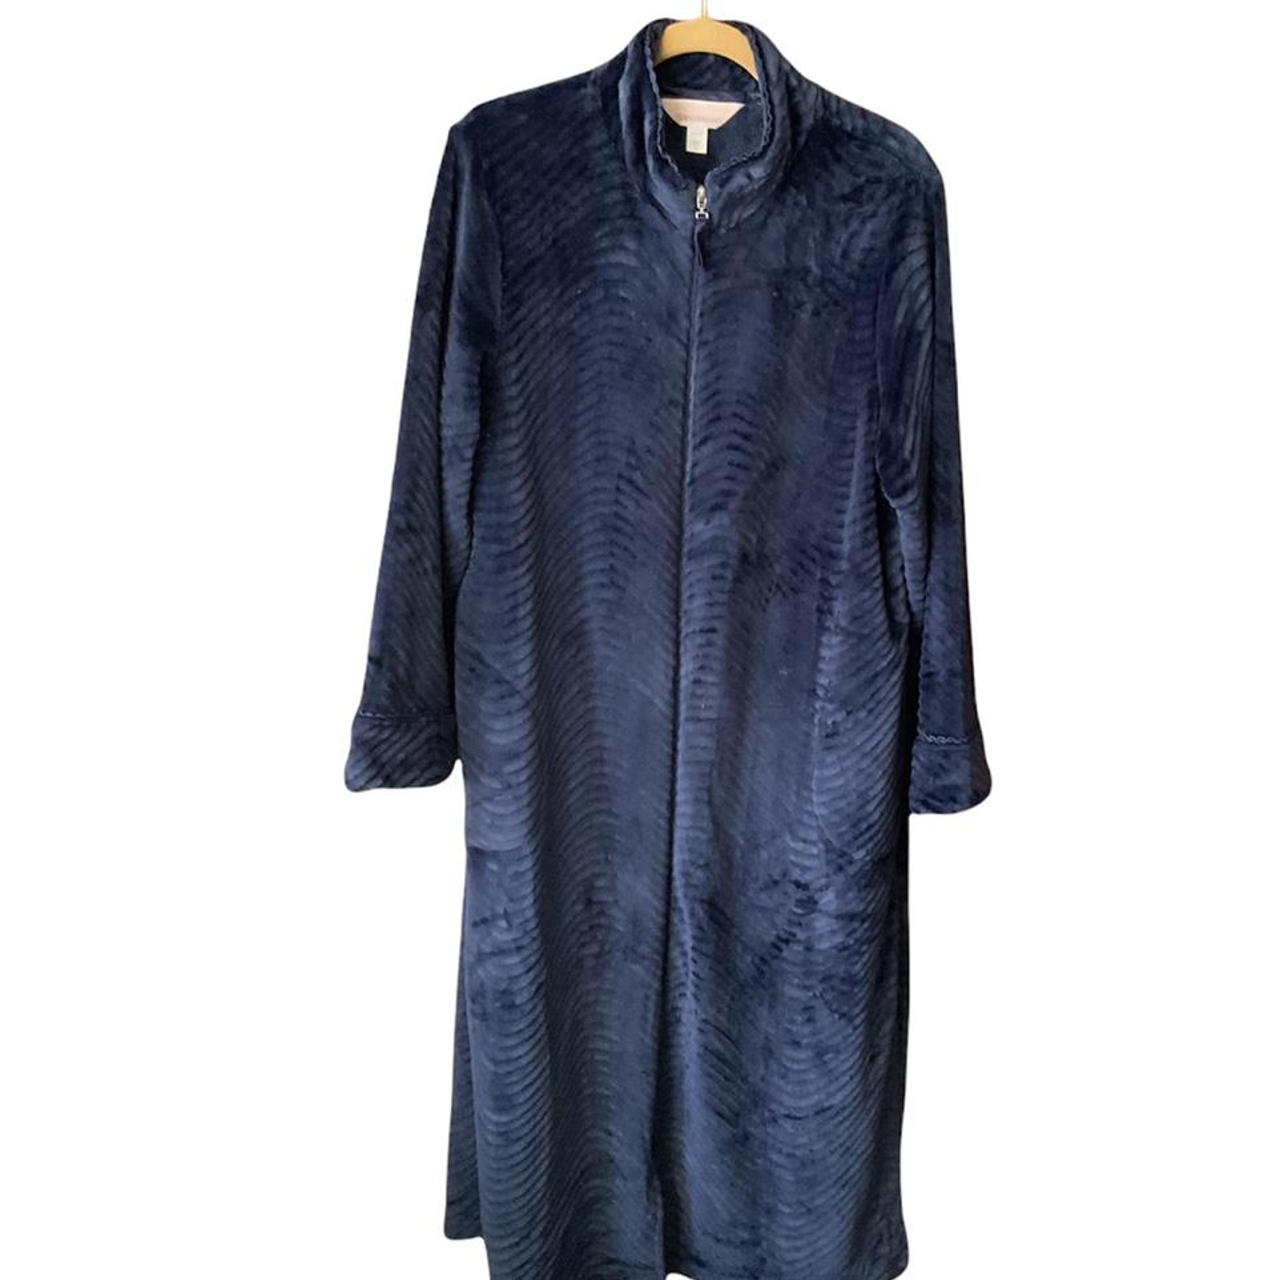 Vintage Designer Stan Herman Soft Velour Robe. Has a... - Depop